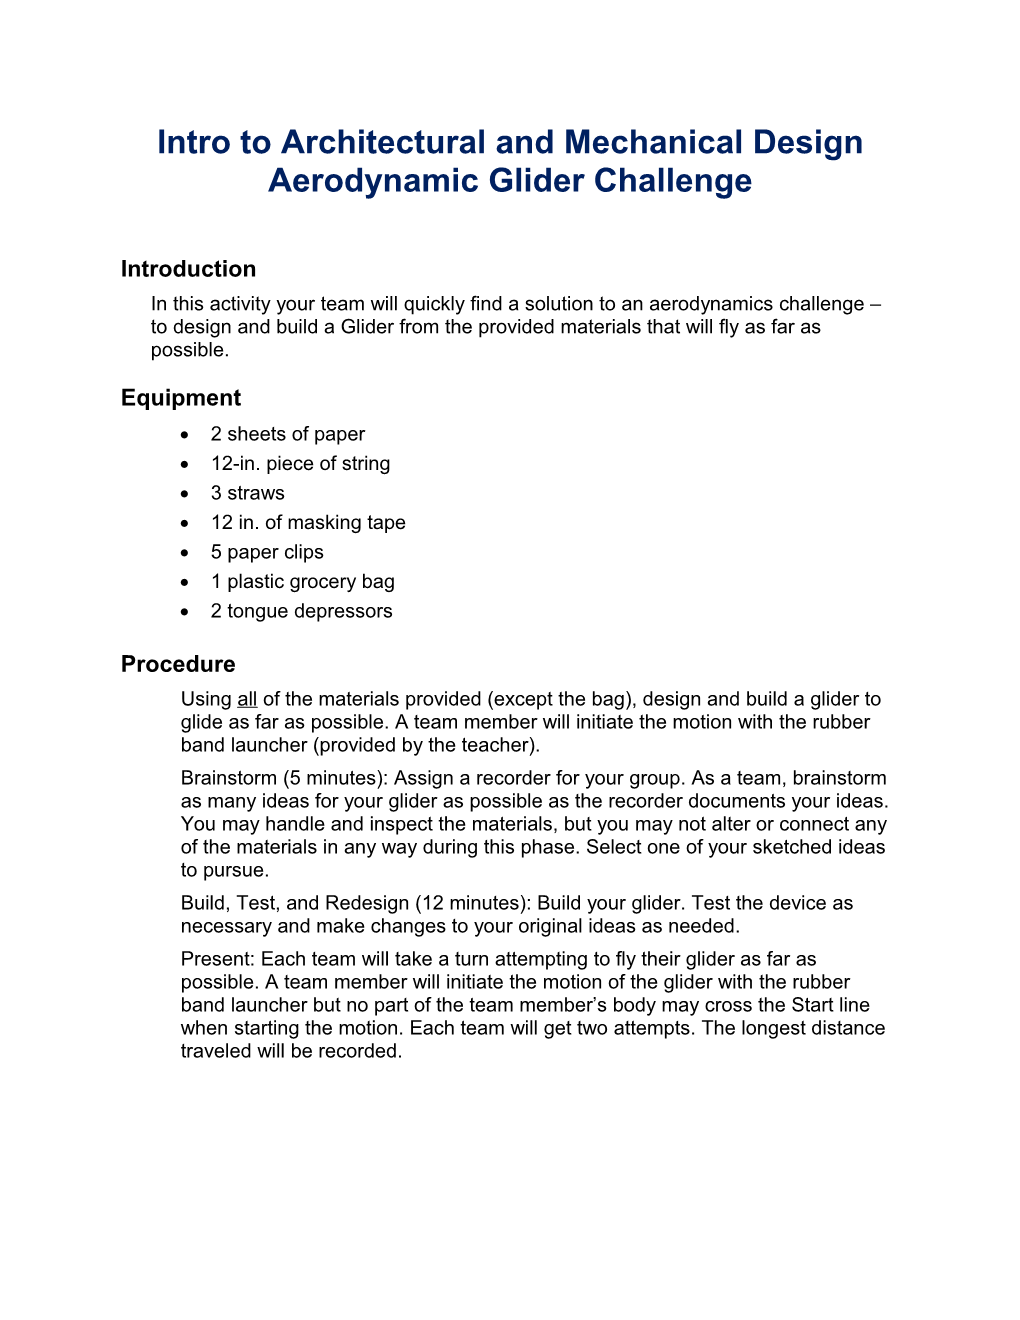 Activity 1.2 Instant Challenge: Aerodynamic Distance